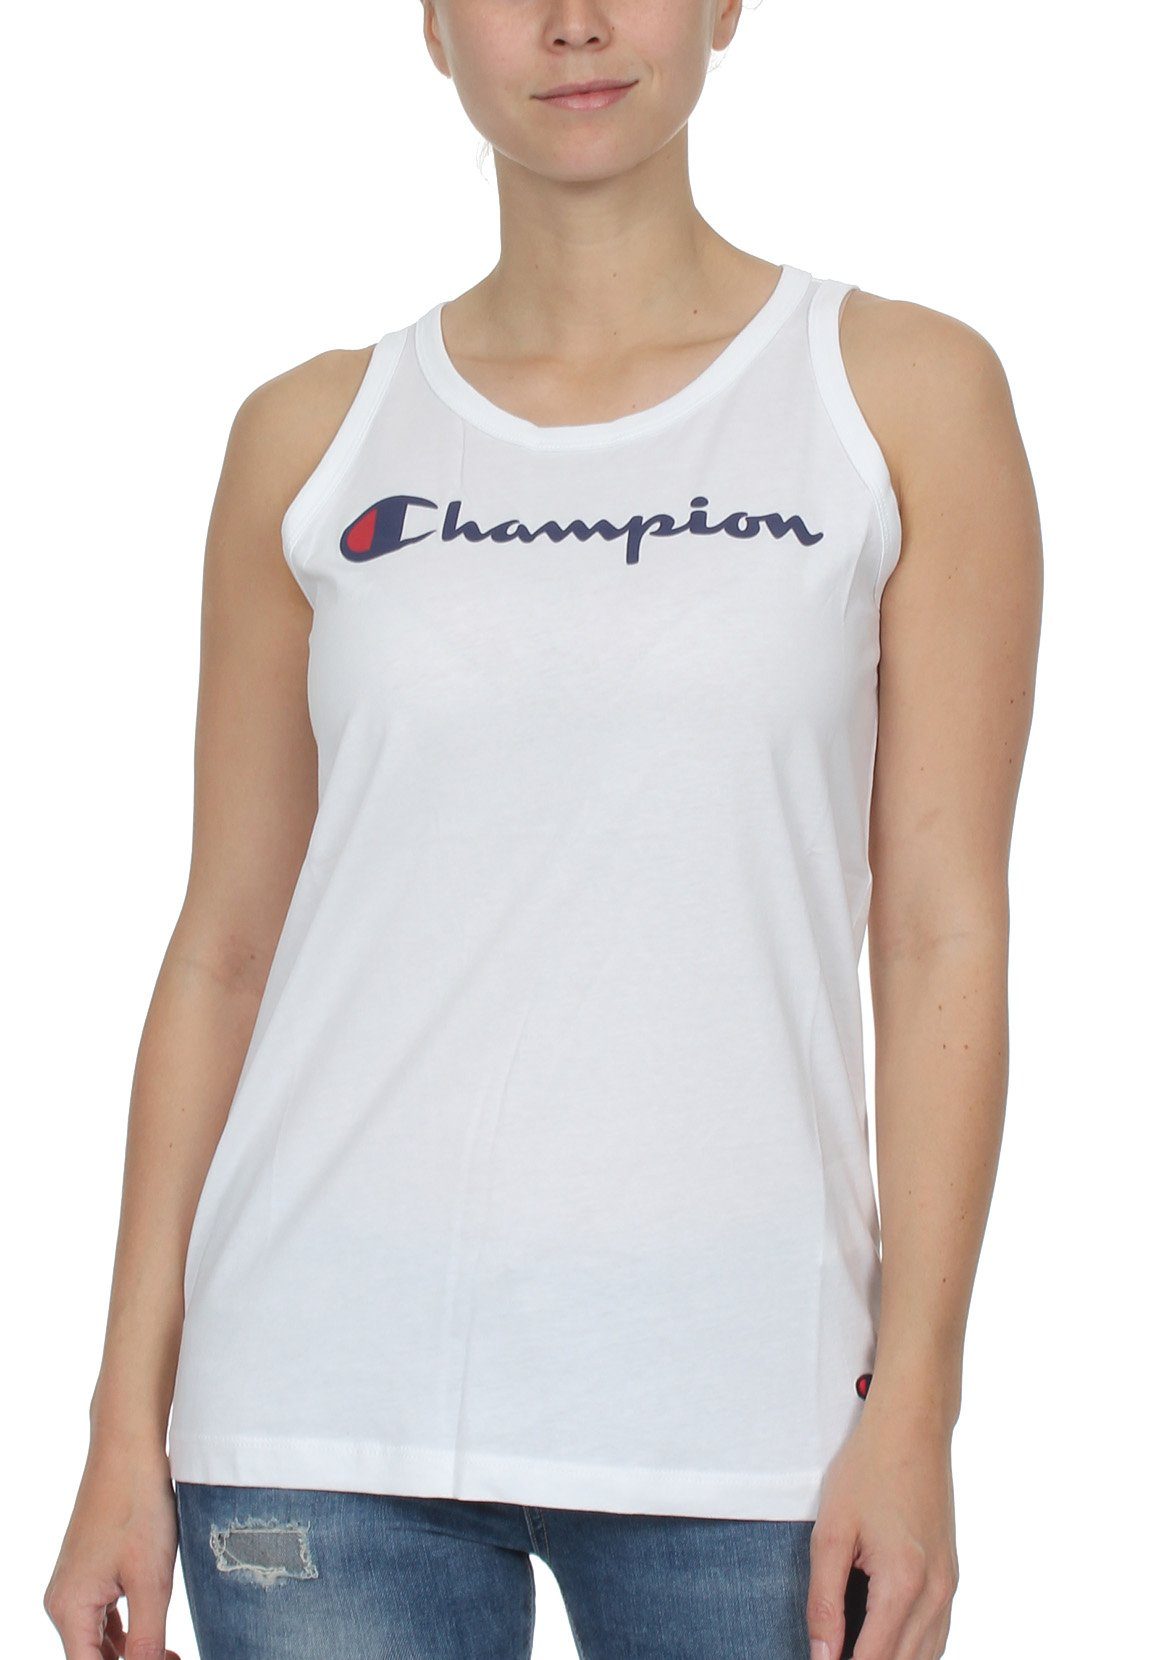 111791 Damen T-Shirt WHT S19 Tanktop WW001 Champion Champion Weiss